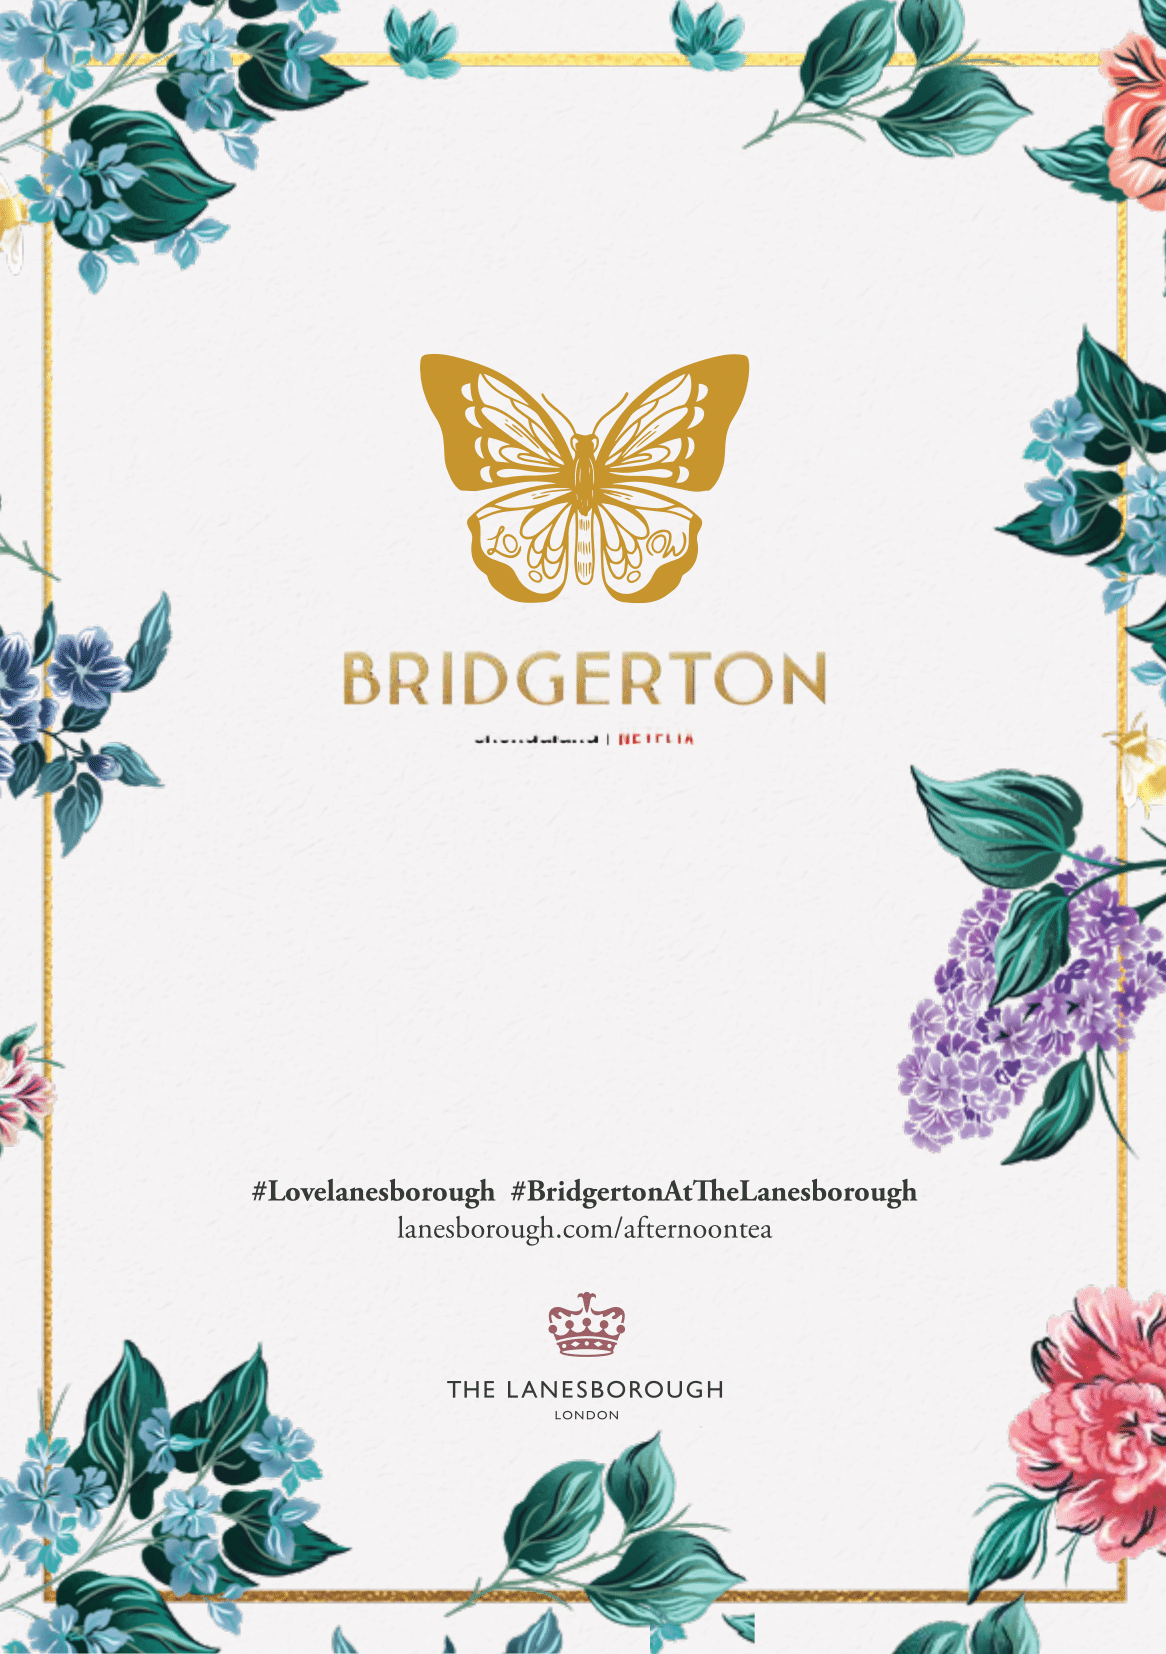 Bridgerton postal: an invitation card for dinning in Bridgerton Experience